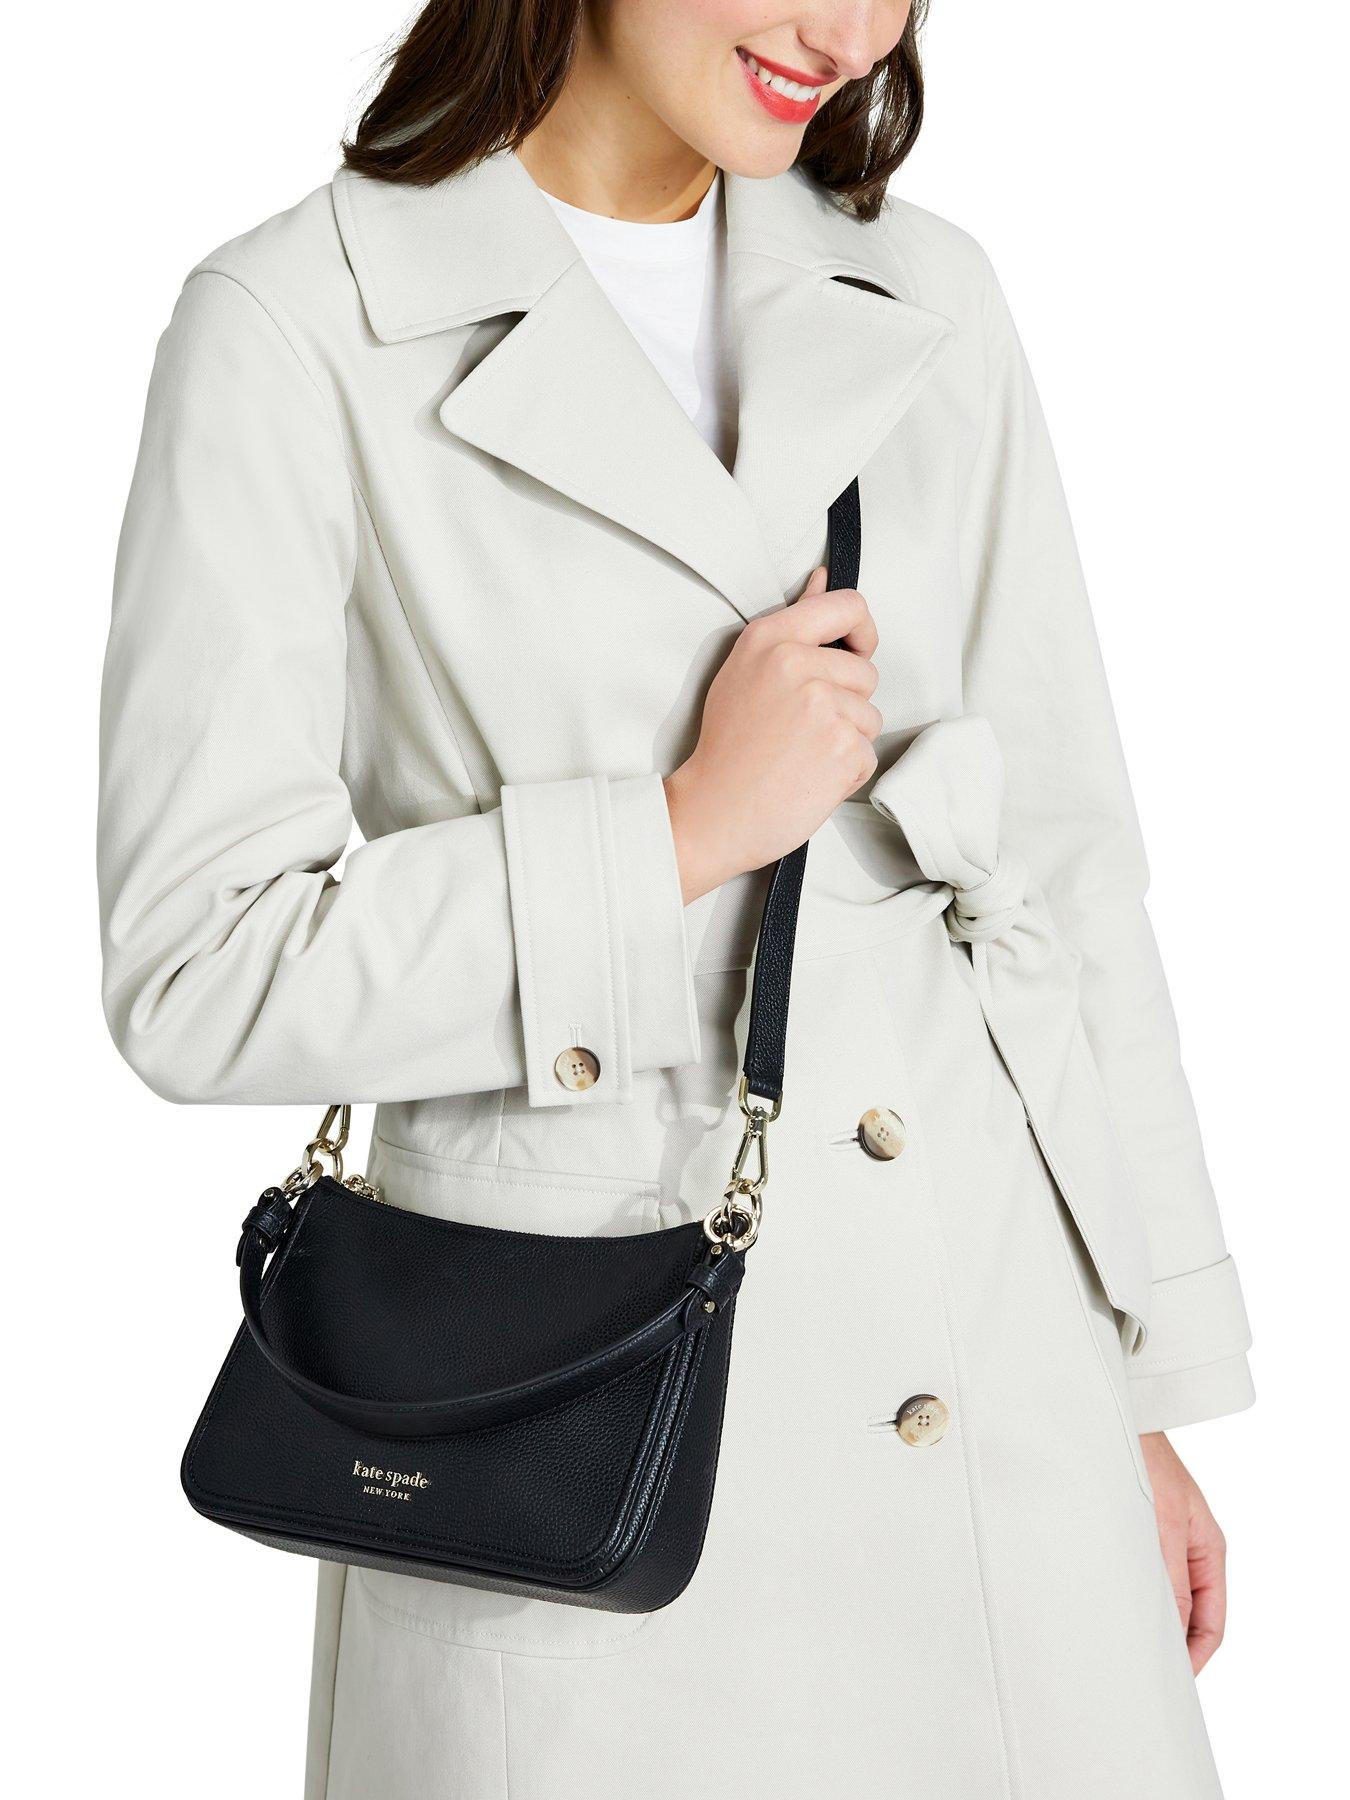 Kate Spade New York Hudson Pebbled Leather Medium Convertible Flap Shoulder Bag - Black